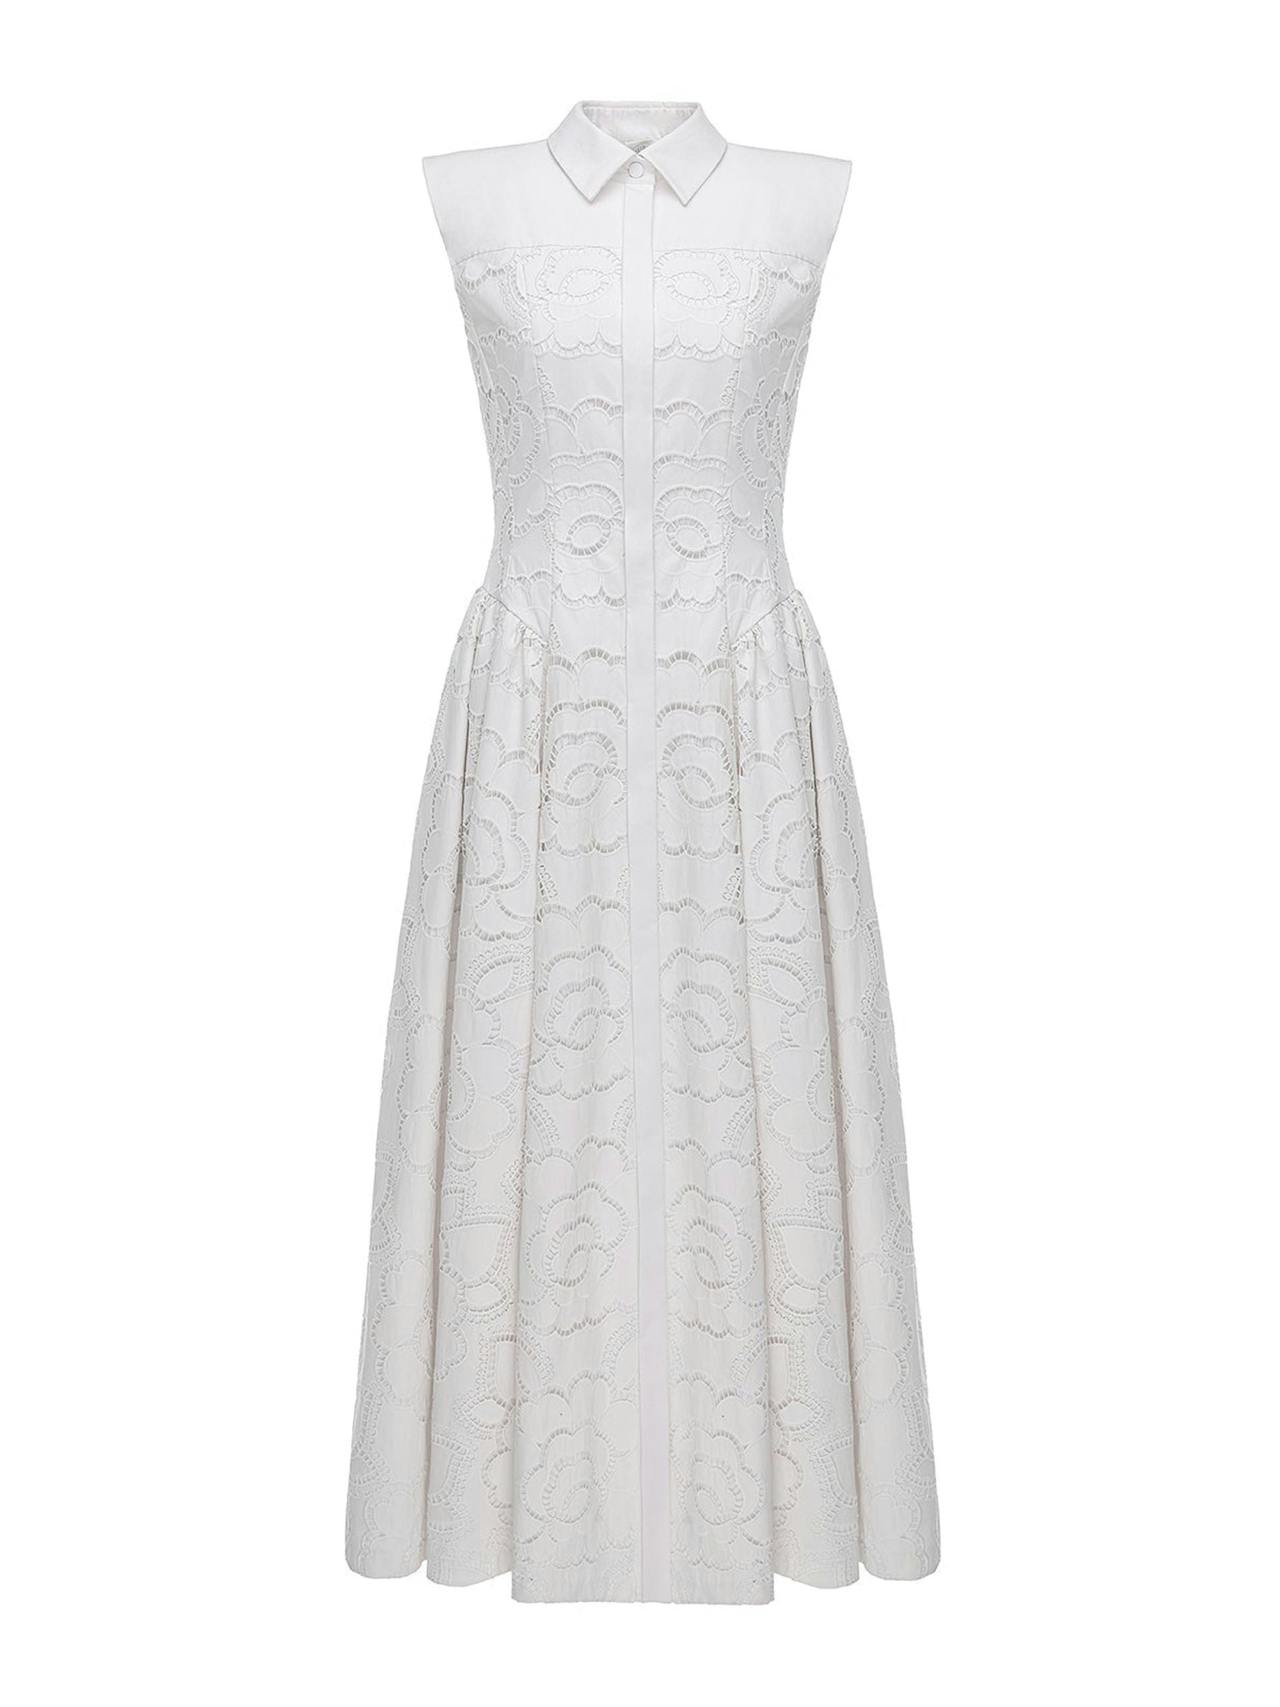 White embroidered cotton Alain dress